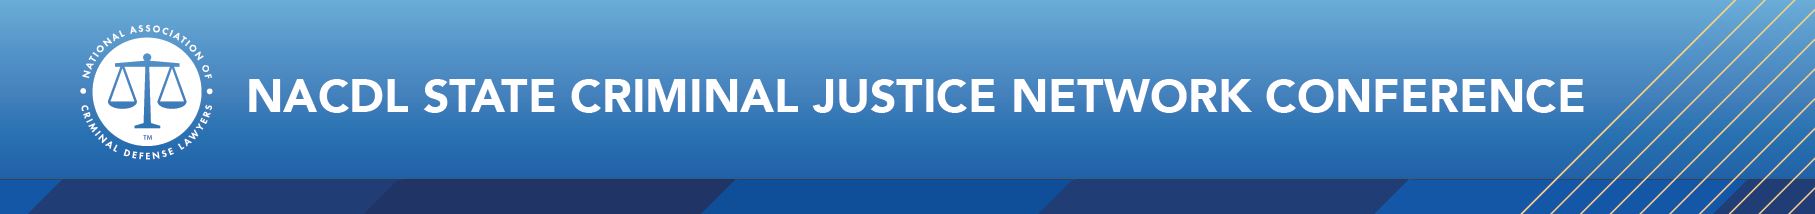 NACDL State Criminal Justice Network Conference